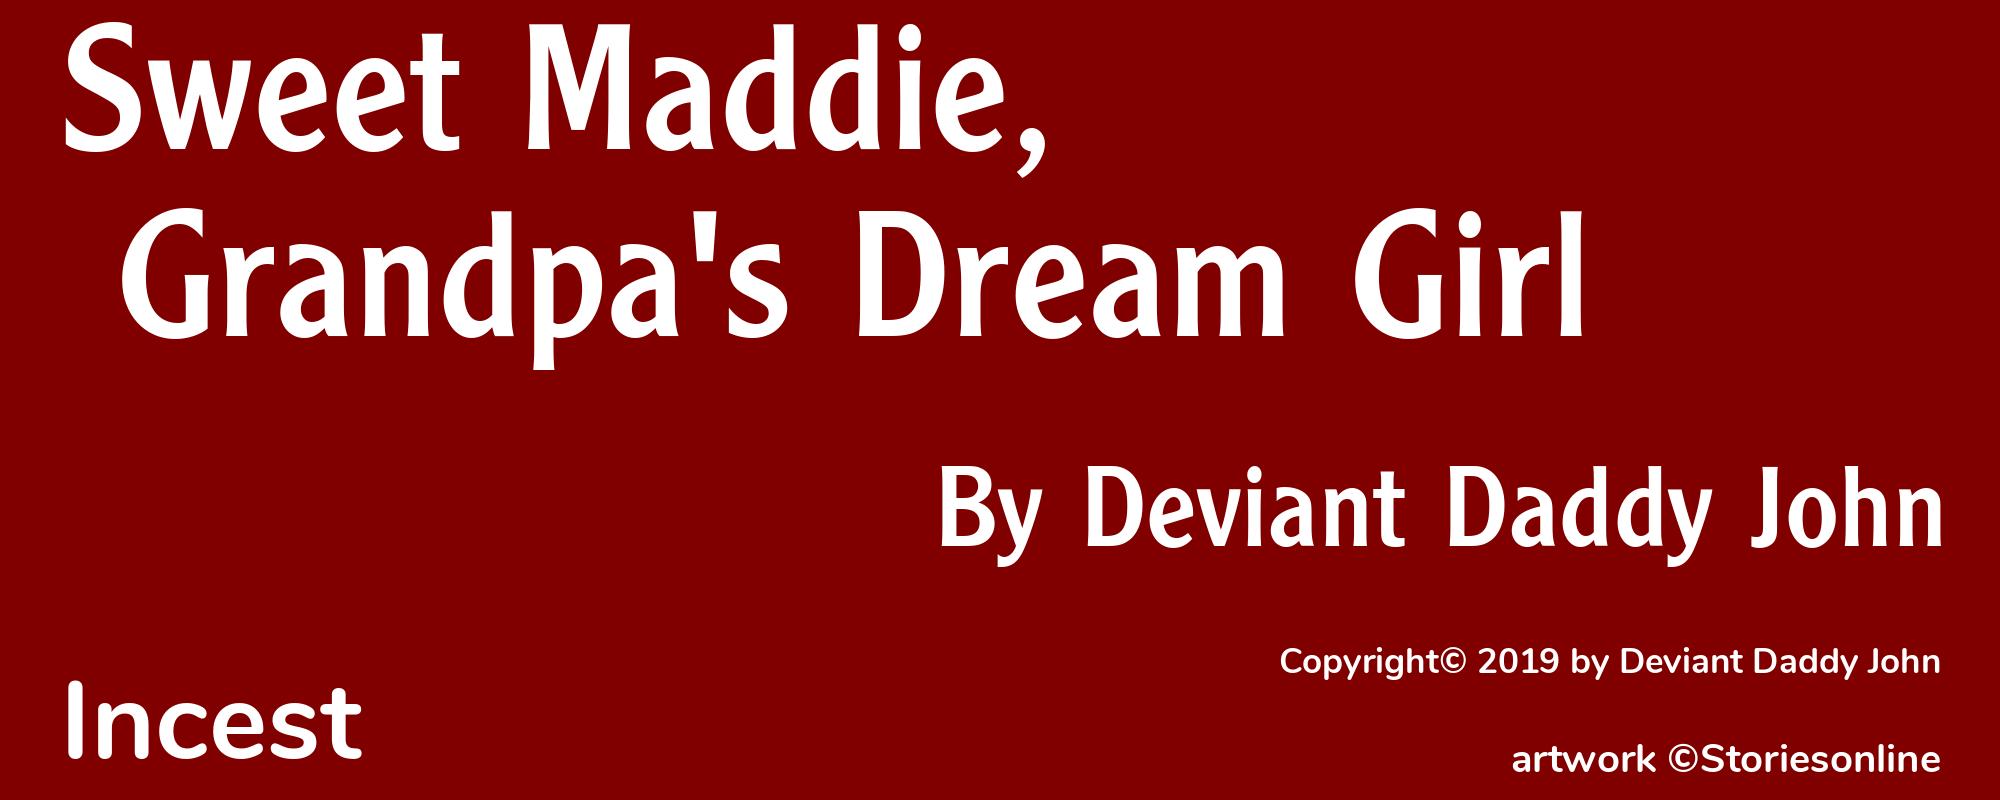 Sweet Maddie, Grandpa's Dream Girl - Cover